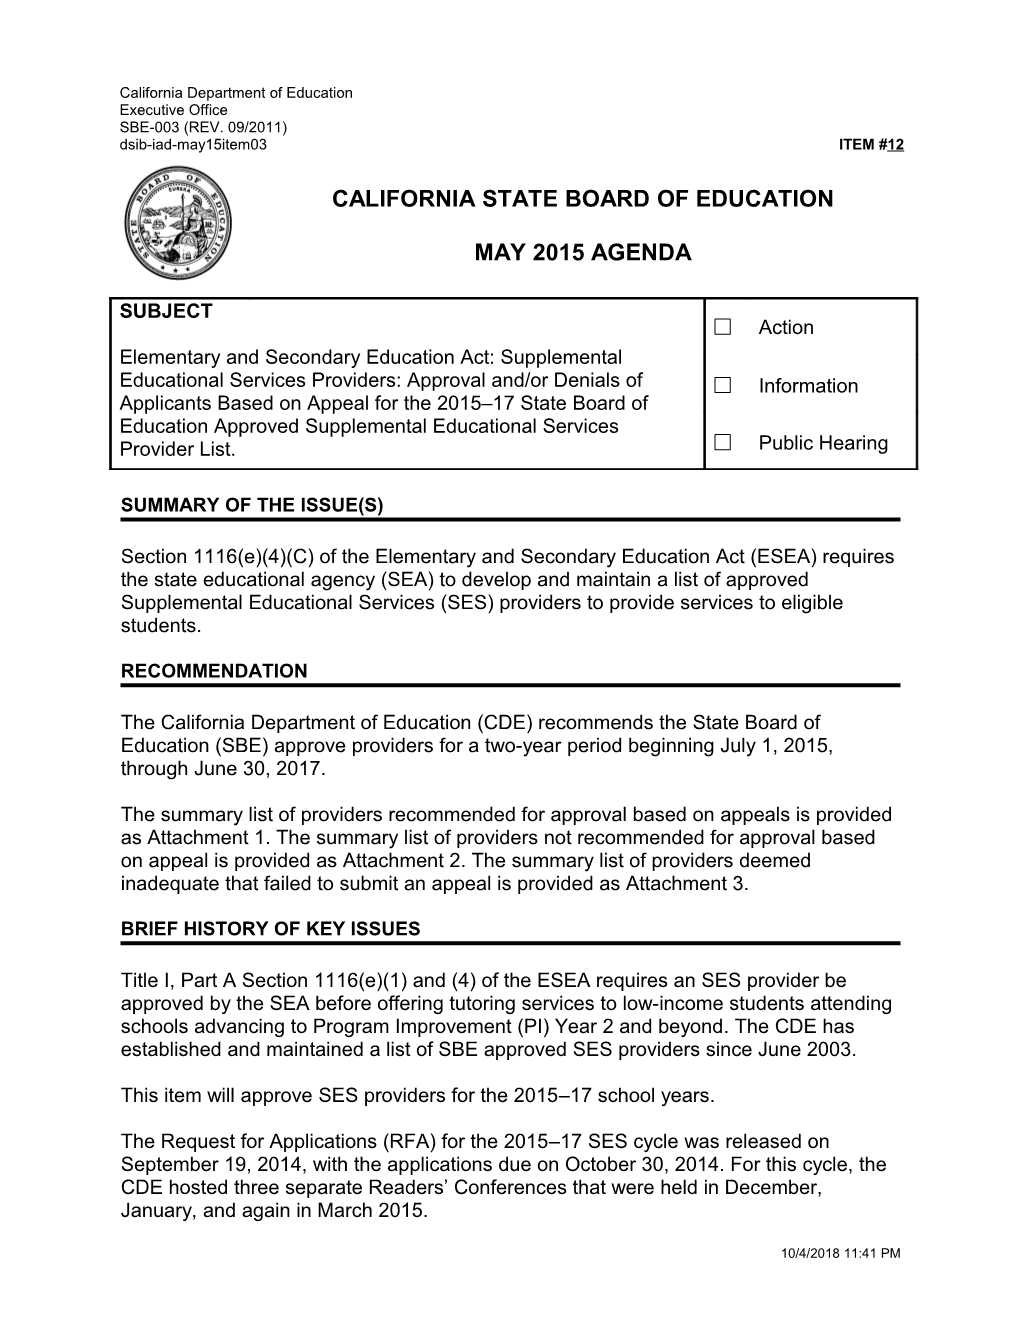 May 2015 Agenda Item 12 - Meeting Agendas (CA State Board of Education)